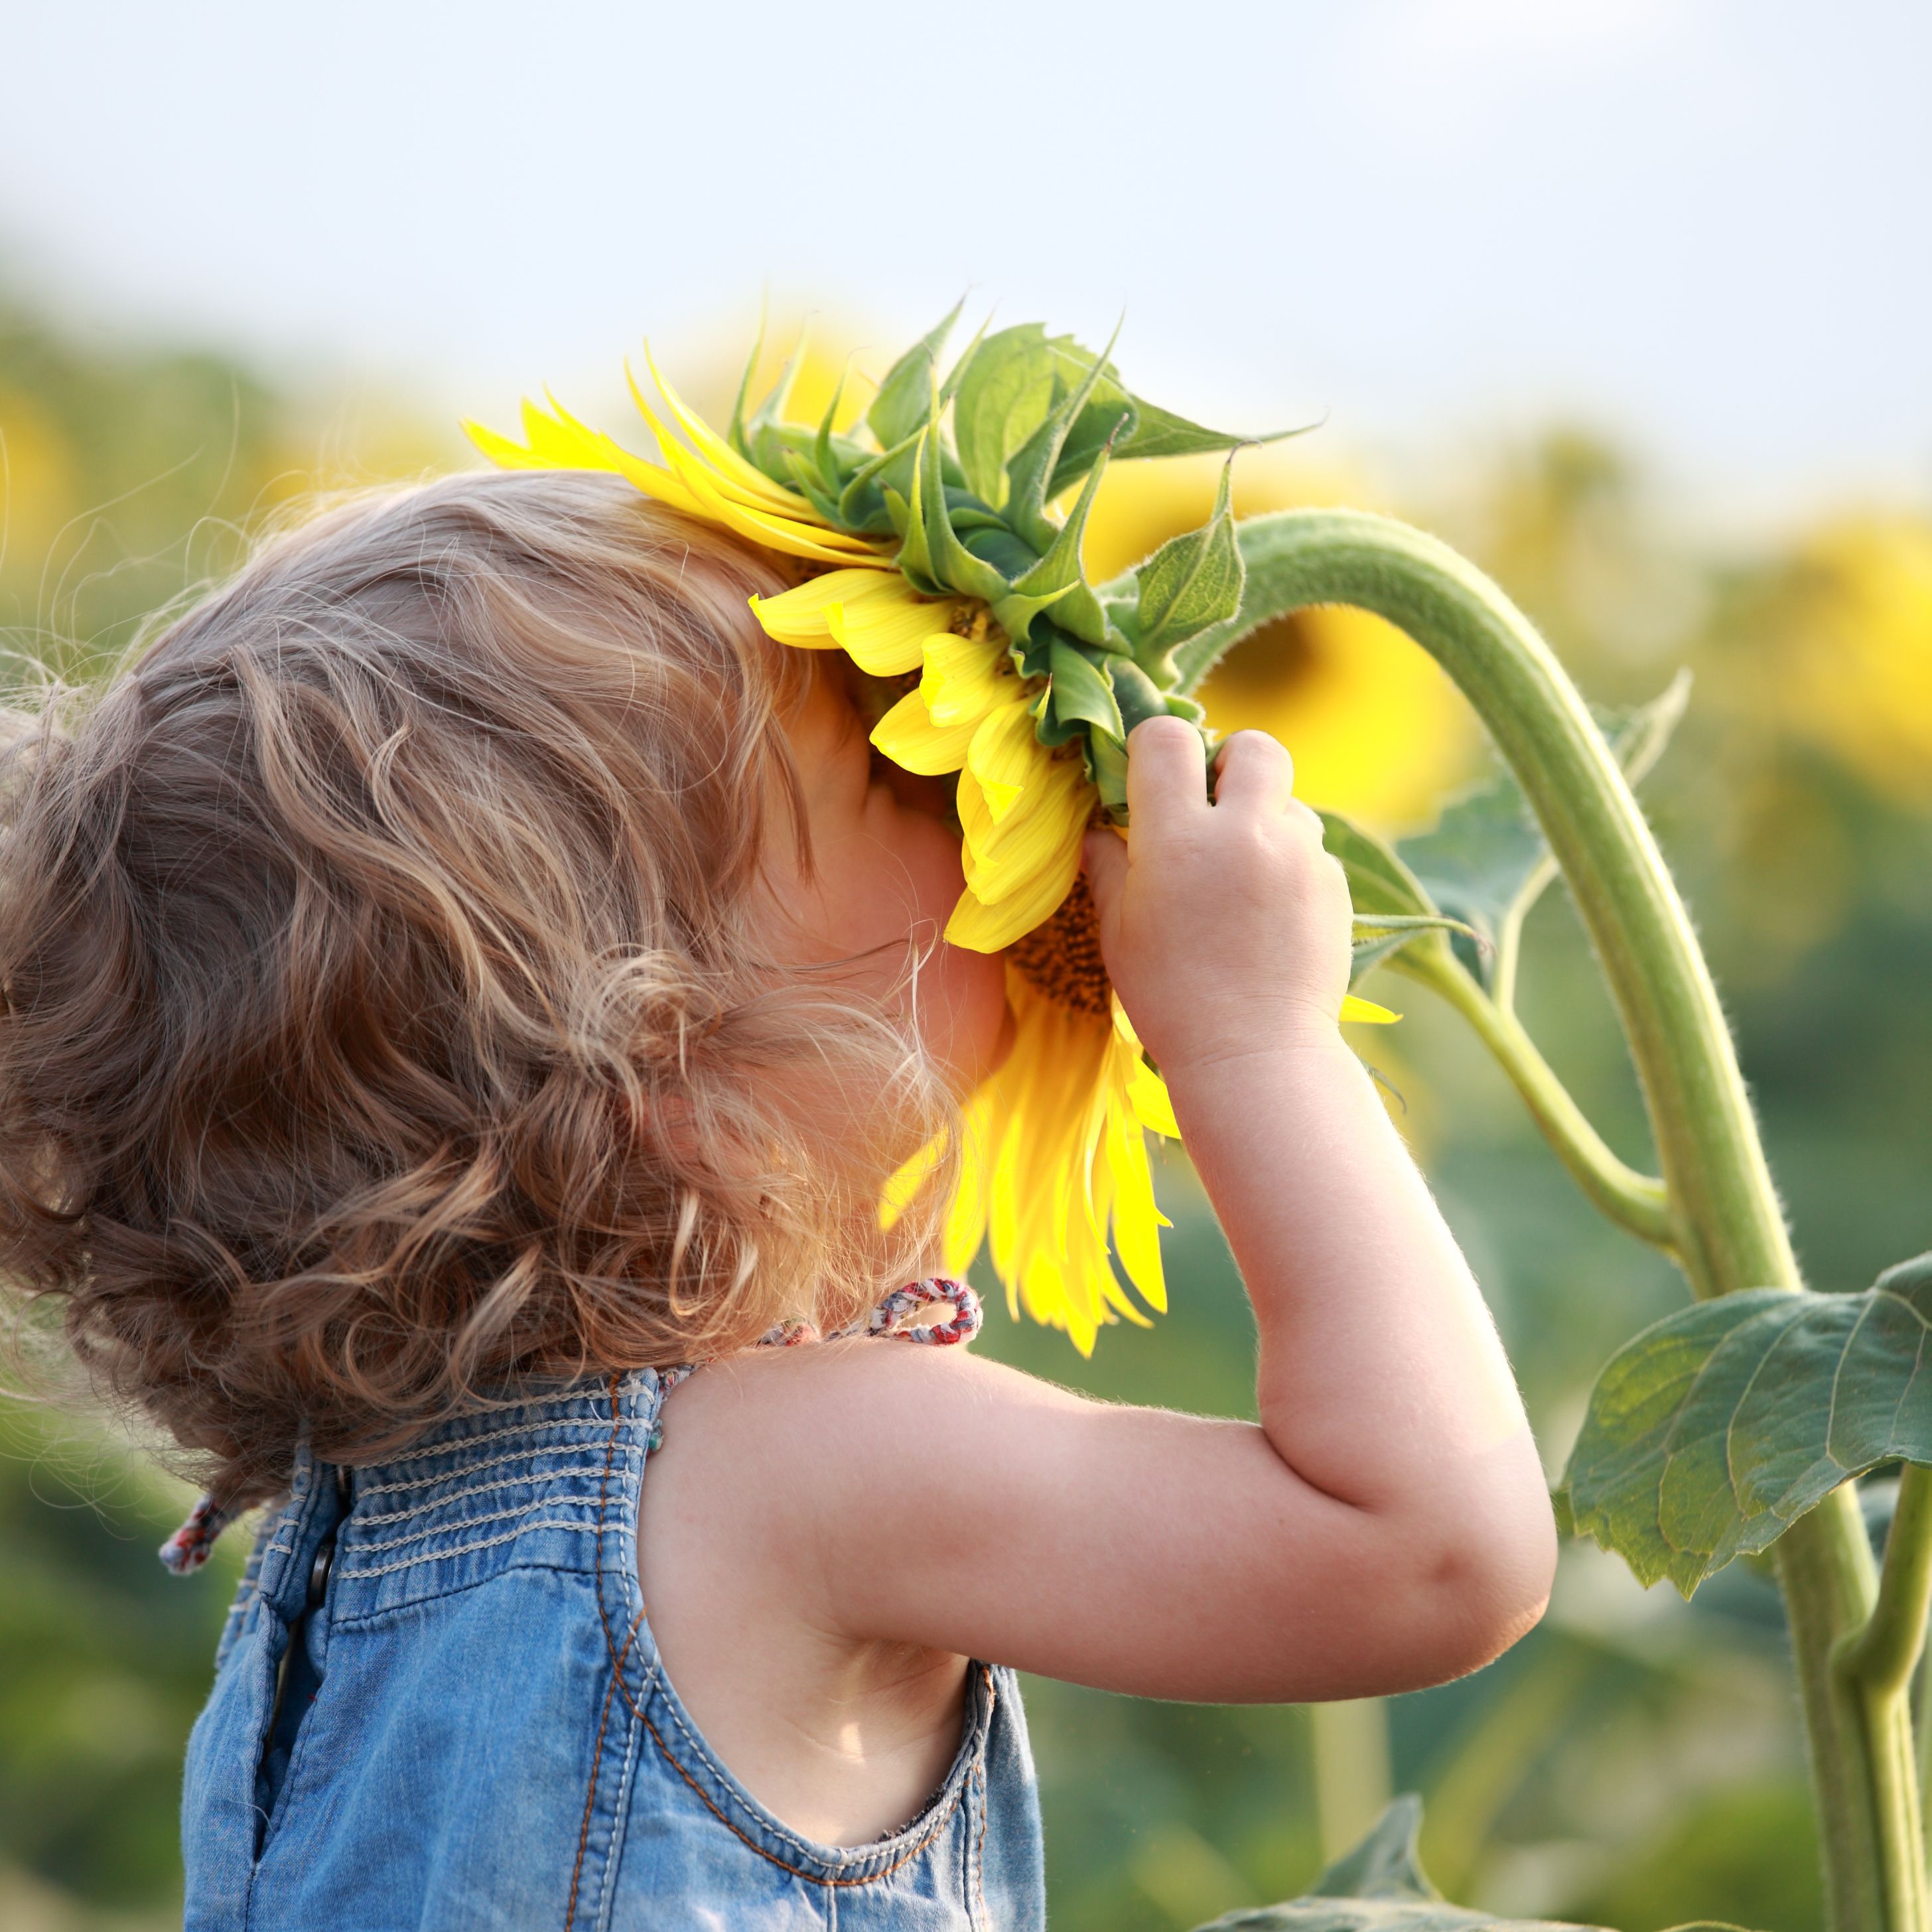 Children learn through their senses | Sensory ideas | Pinterest ...